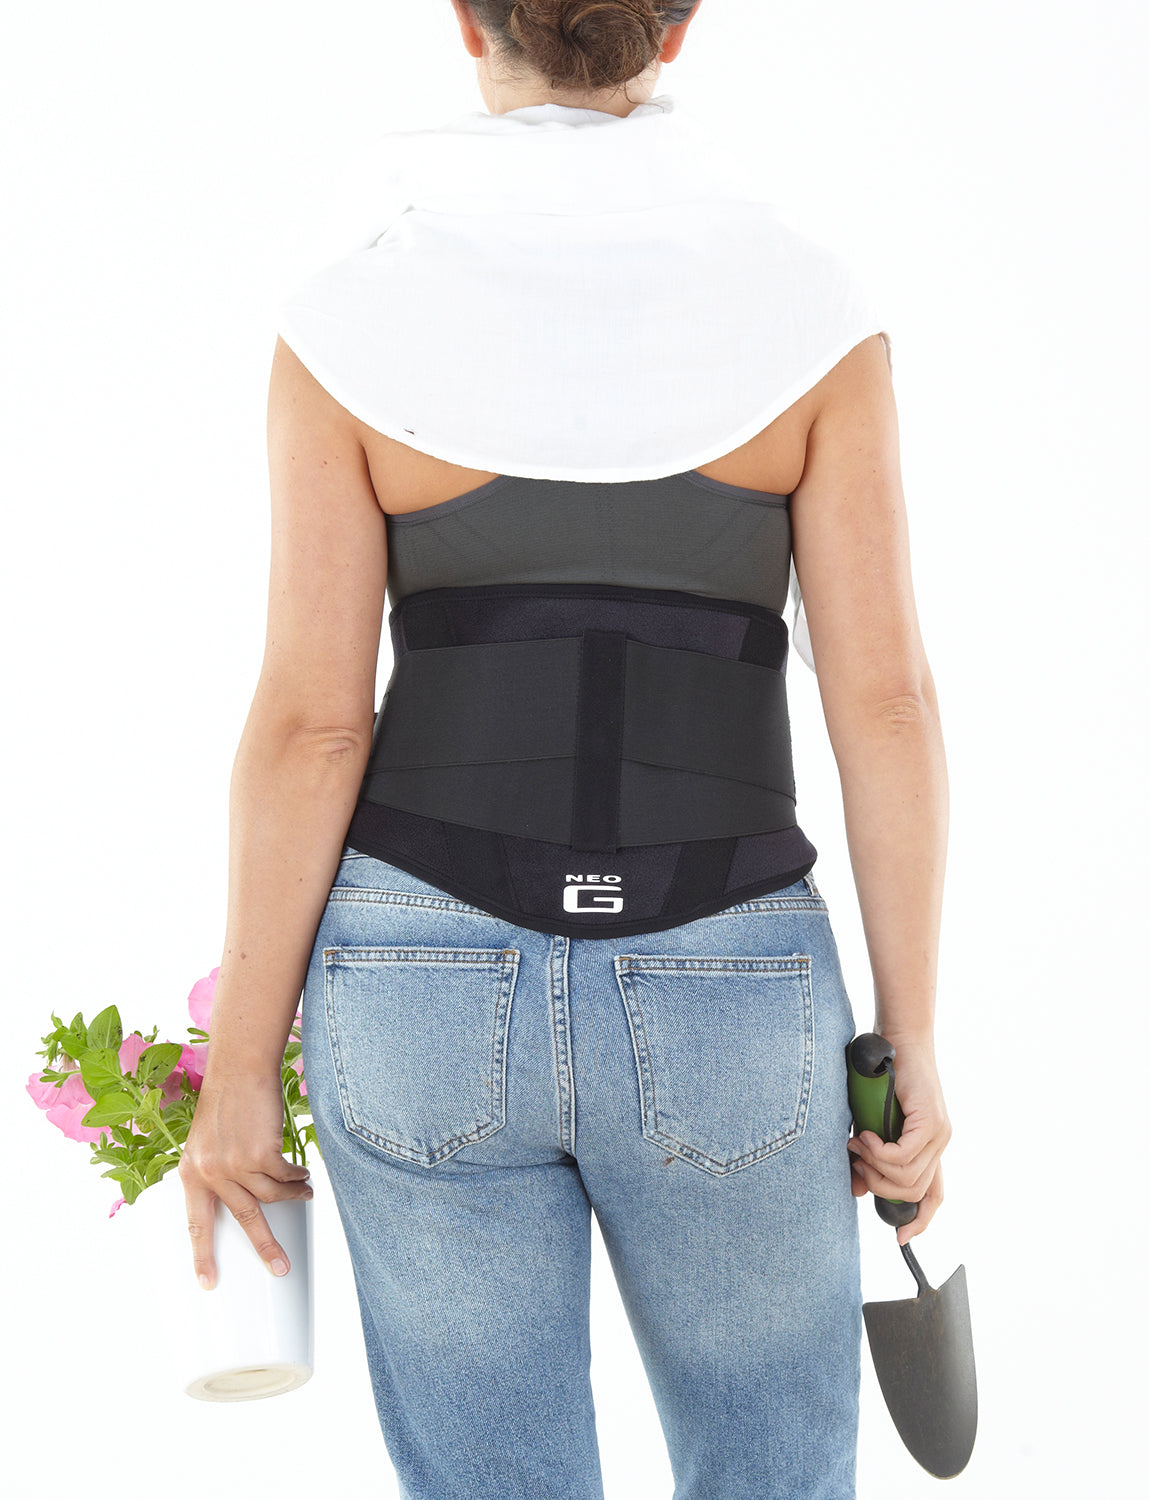 Rdeghly Adjustable Lumbar Support Belt Lower Back Brace Posture